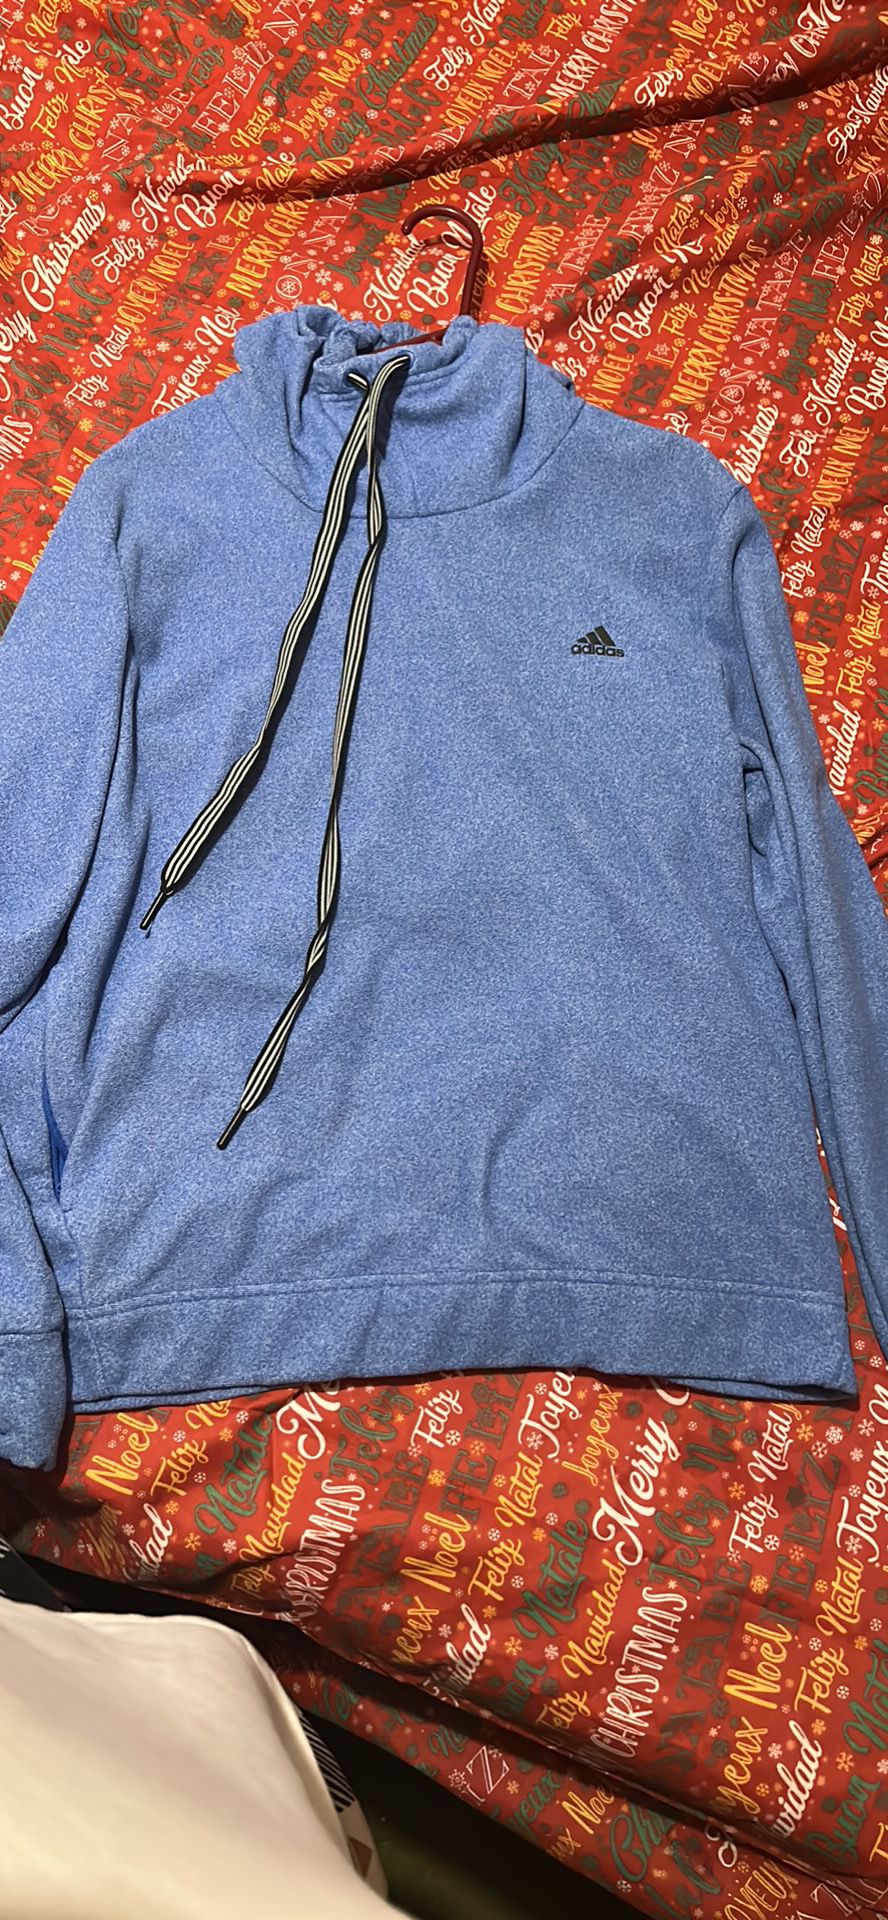 Adidas’s Fleece Sweater